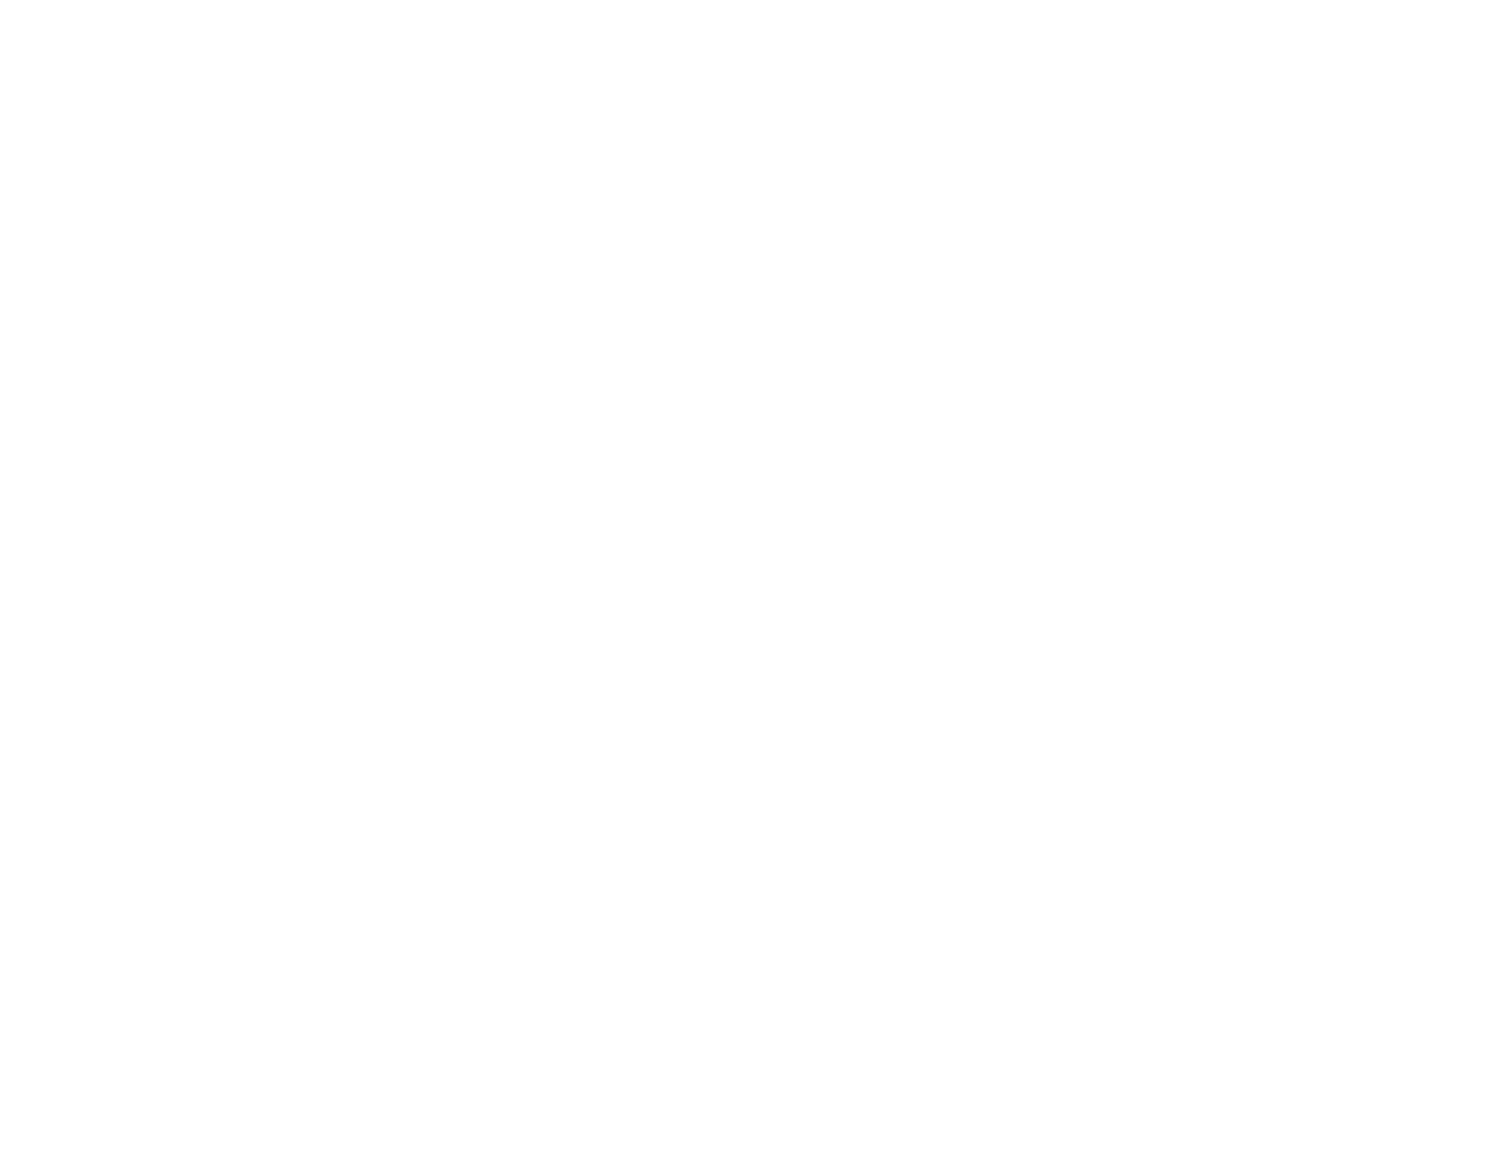 Move Mountains LLC - Local Boulder Area Moving &amp; Organization Company